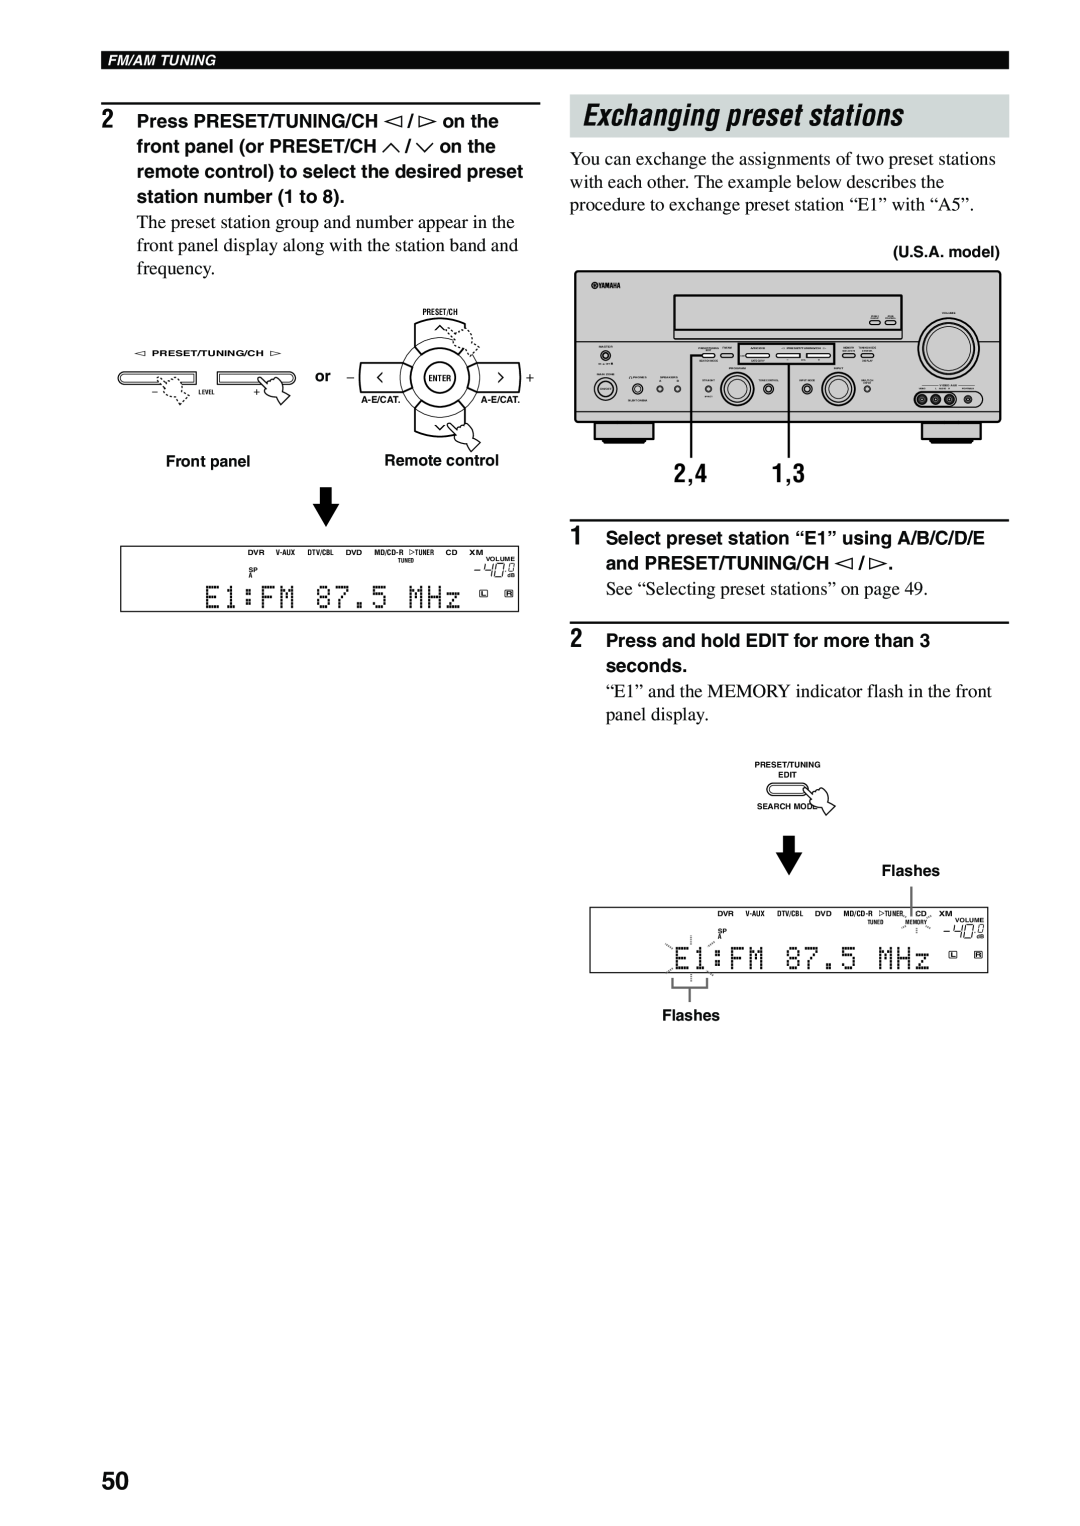 Yamaha RX-V559 owner manual E1:FM 87.5 MHz L R, Exchanging preset stations, 2,4 1,3 